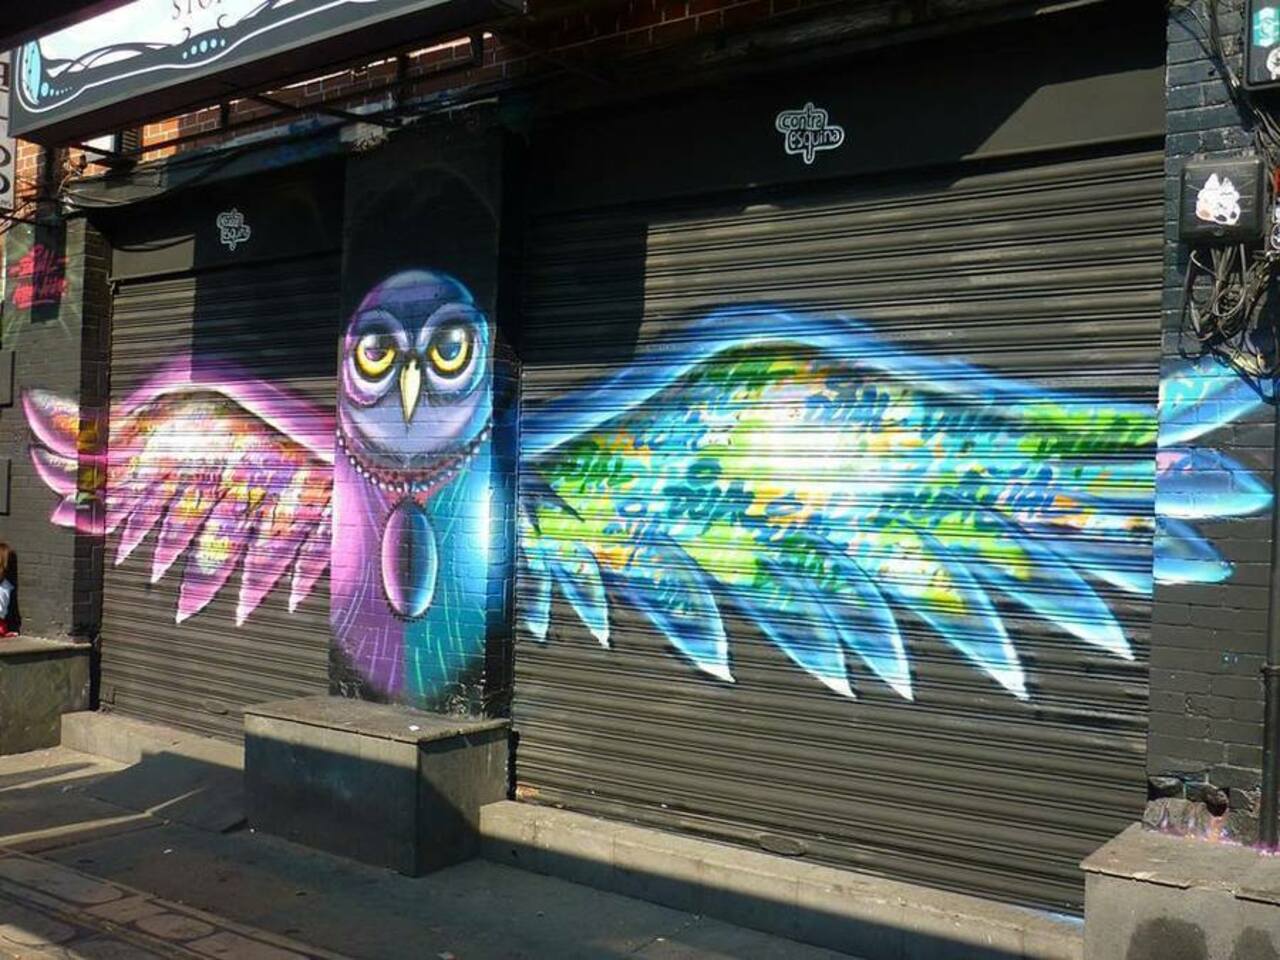 Beautiful Owl Mural By Dual Hemp! http://wp.me/p5VP1D-of
#streetart #graffiti http://t.co/tyhEq4dIeQ